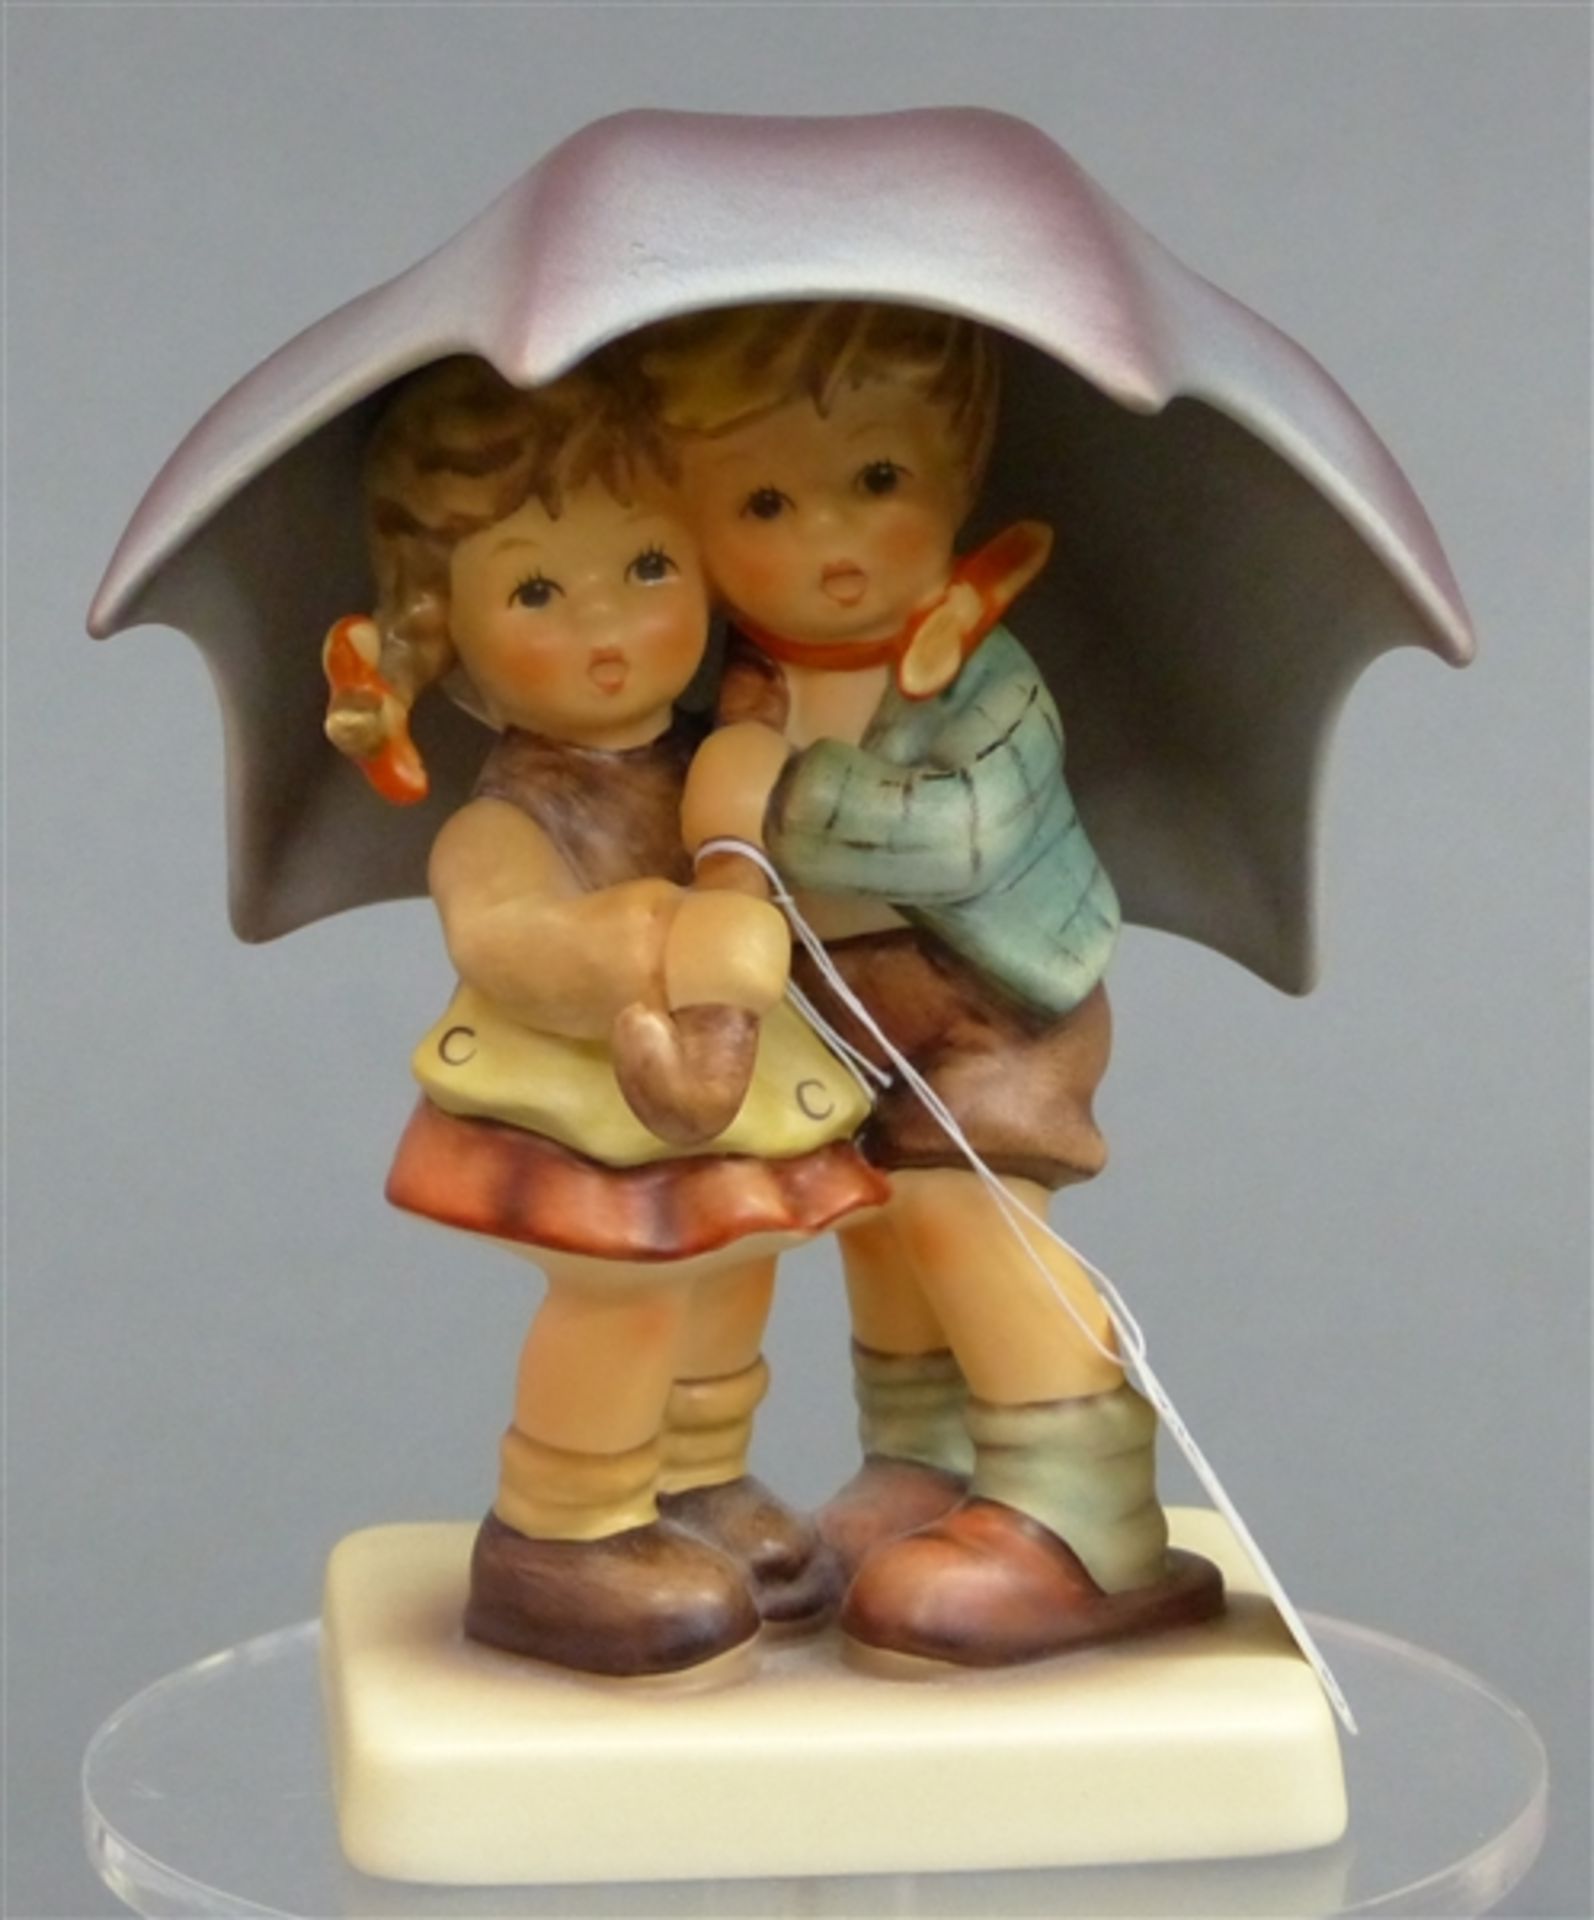 Hummelfigur Porzellan, Kinder unterm Regenschirm "Sauwetter", bunt bemalt, Bodenmarke, h 12 cm,